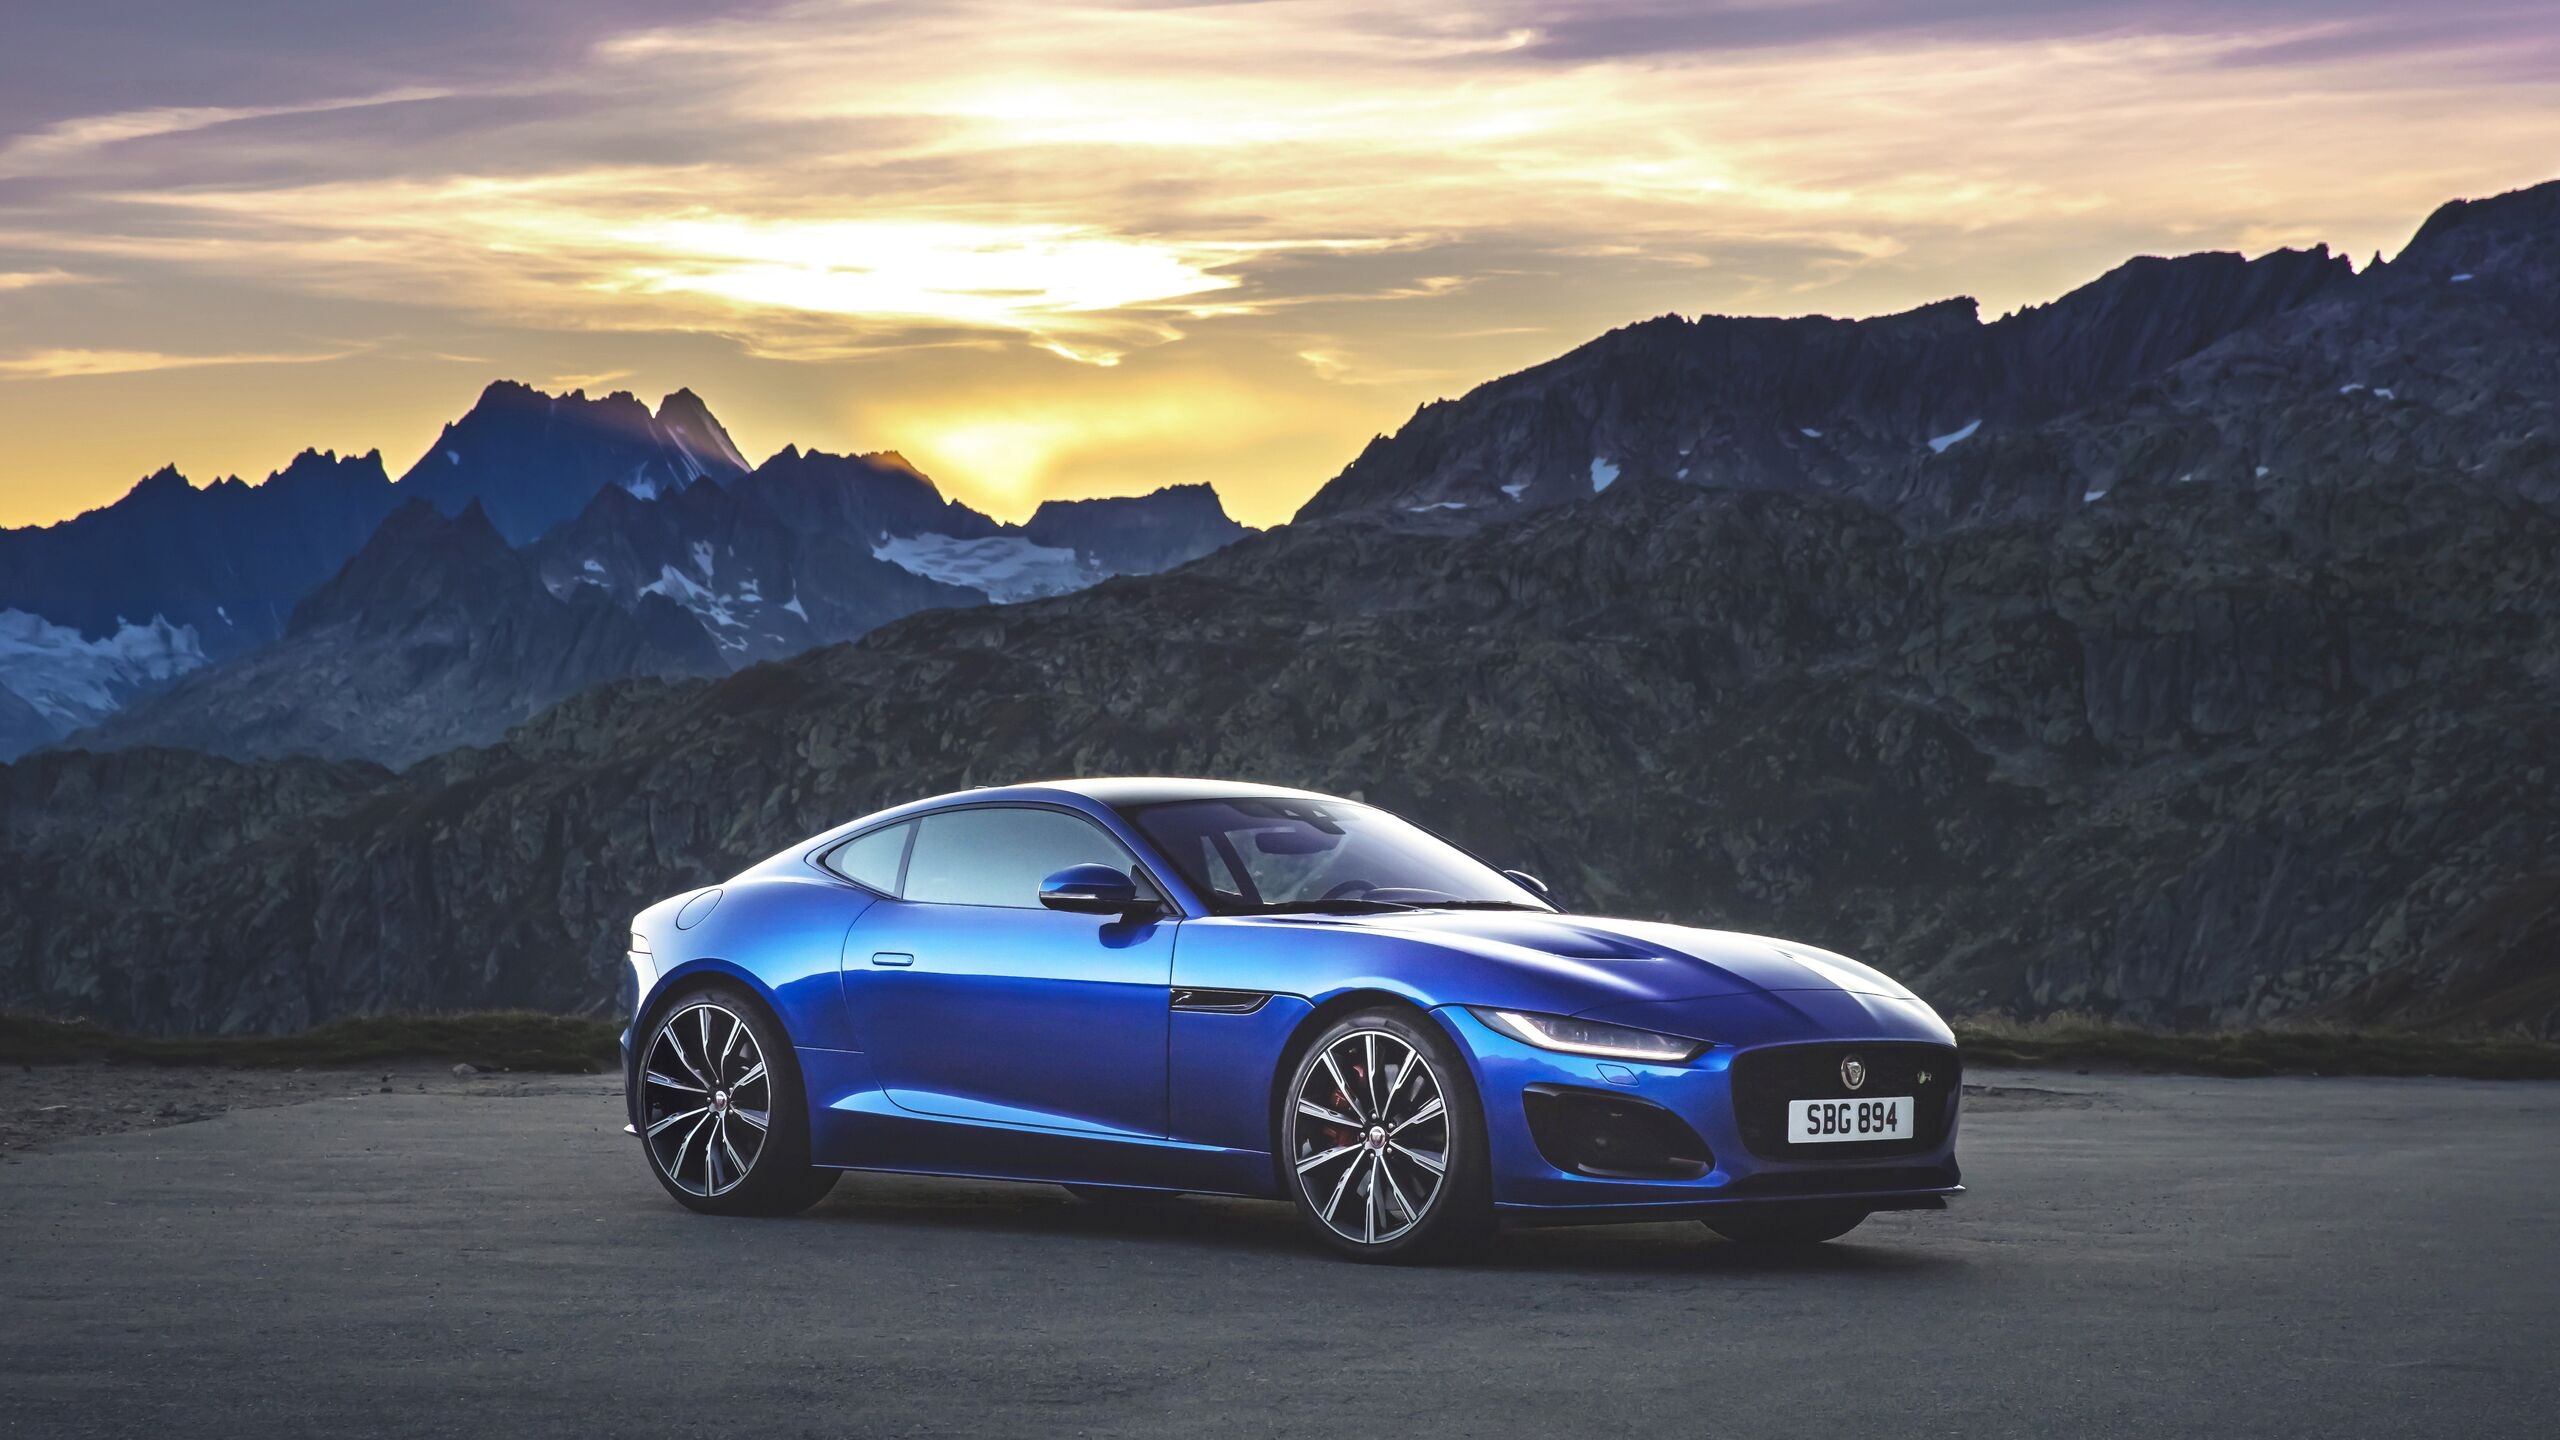 Jaguar F-TYPE, Auto excellence, Stunning visuals, Powerful performance, 2560x1440 HD Desktop